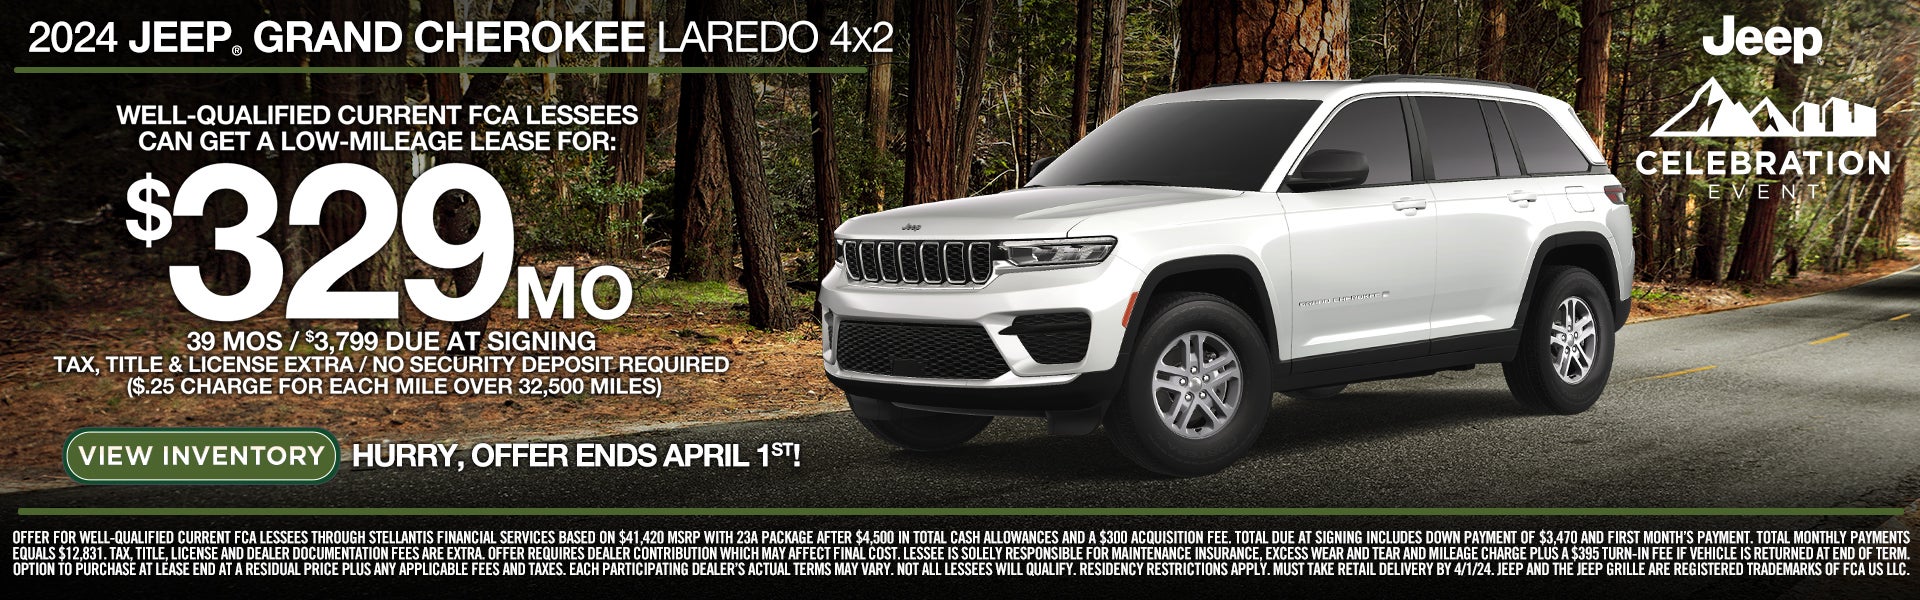 2024 Jeep Laredo